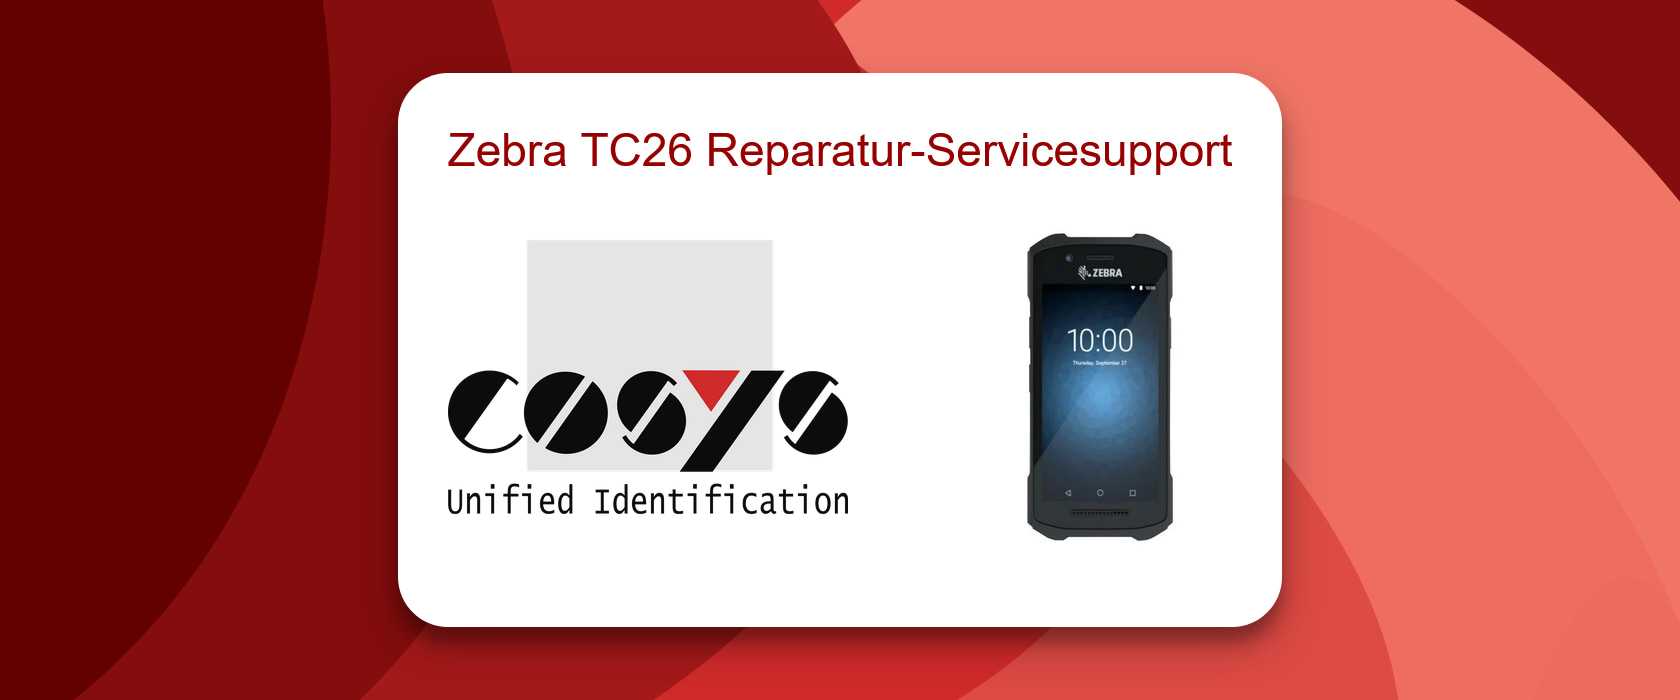 Zebra TC26 Service-Support